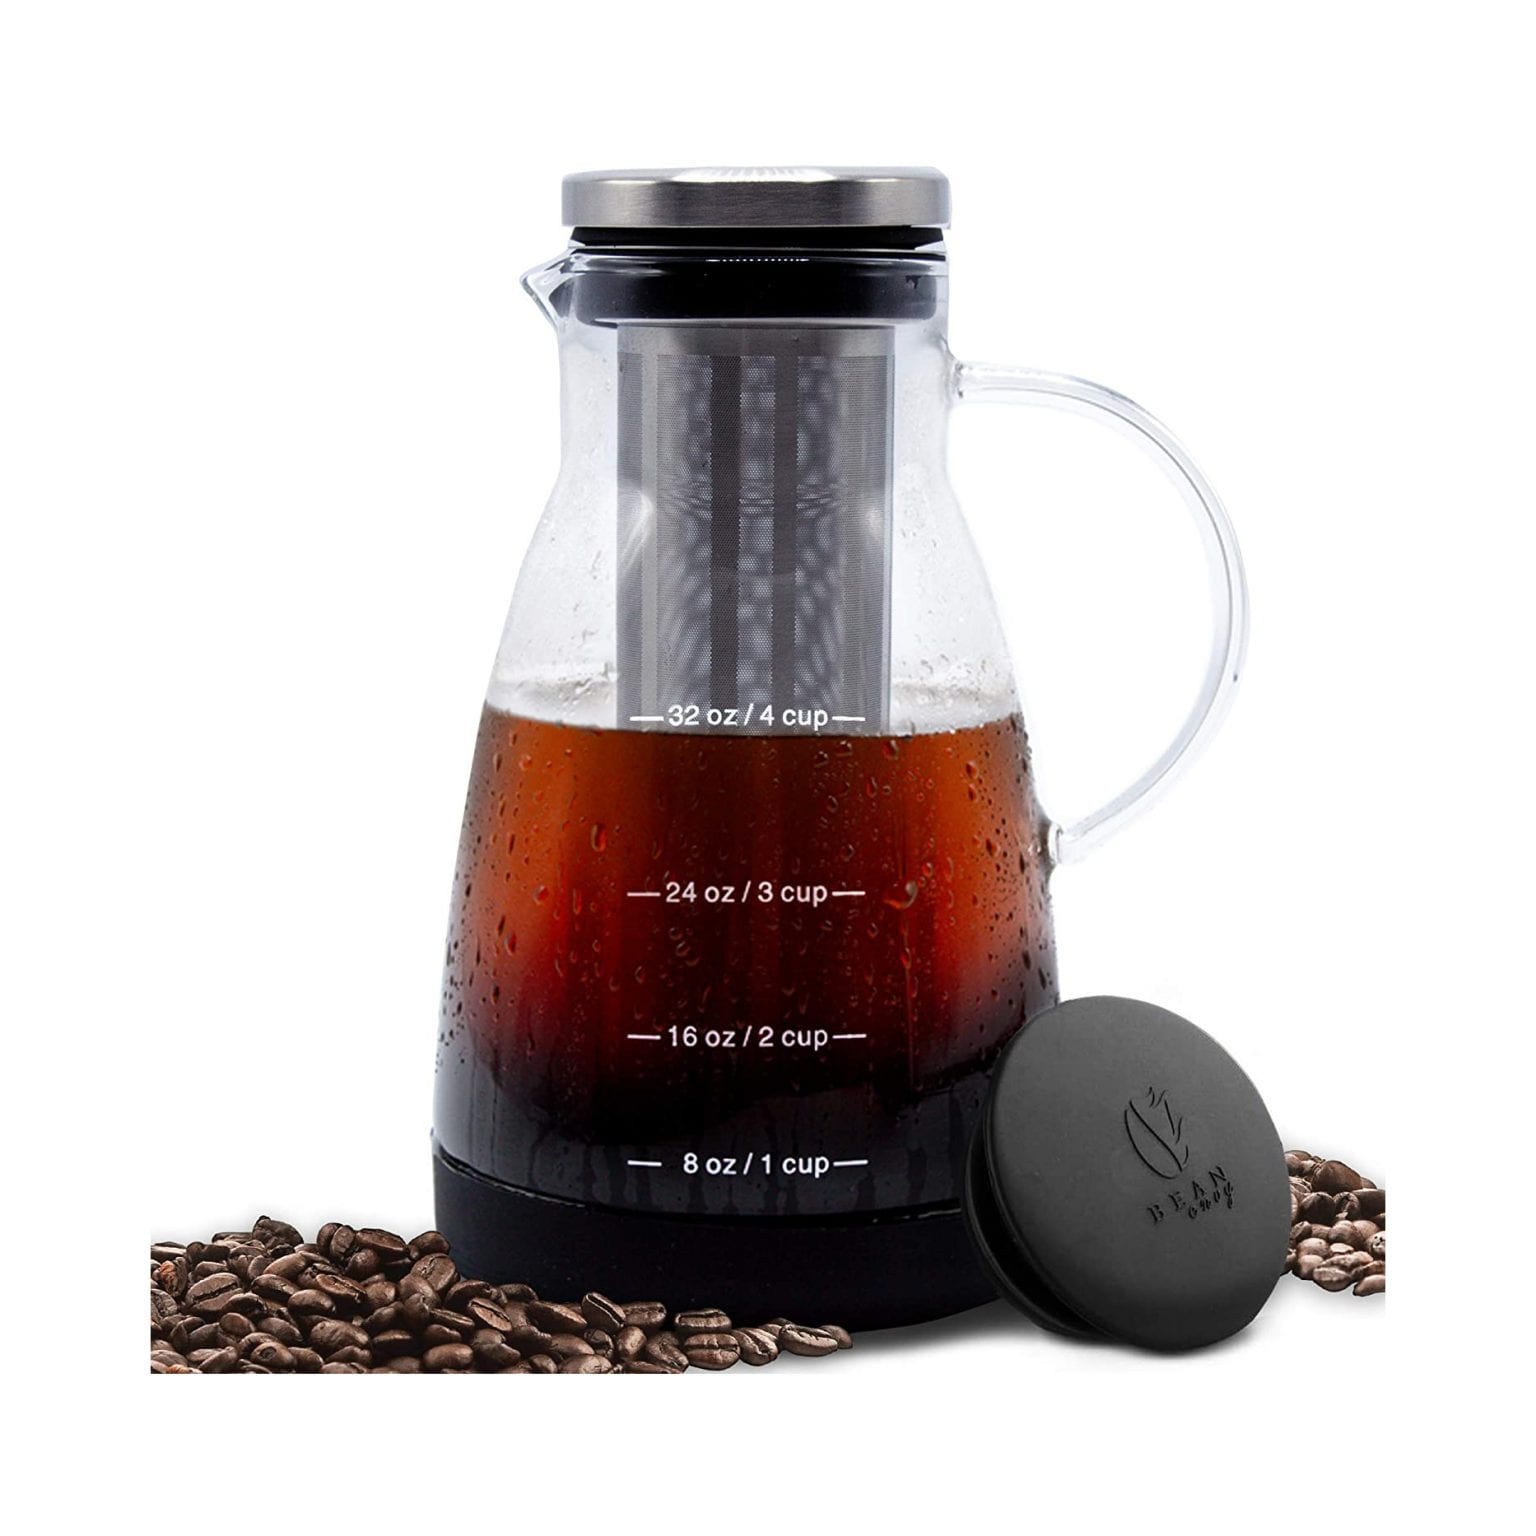 5. Bean Envy Cold Brew Coffee Maker 1536x1536 